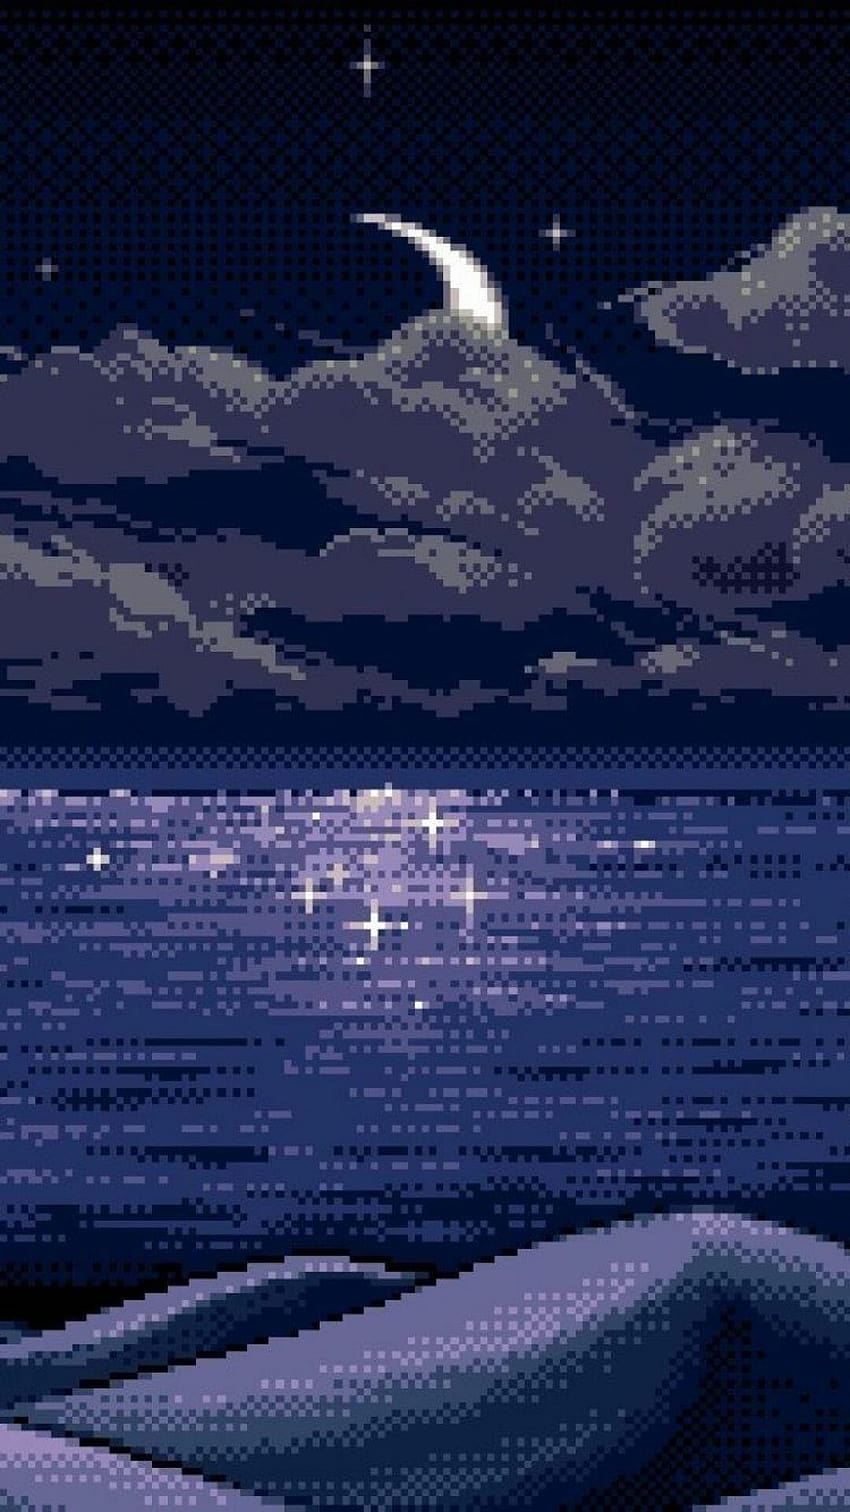 A pixelated image of a moonlit sea - Pixel art, art